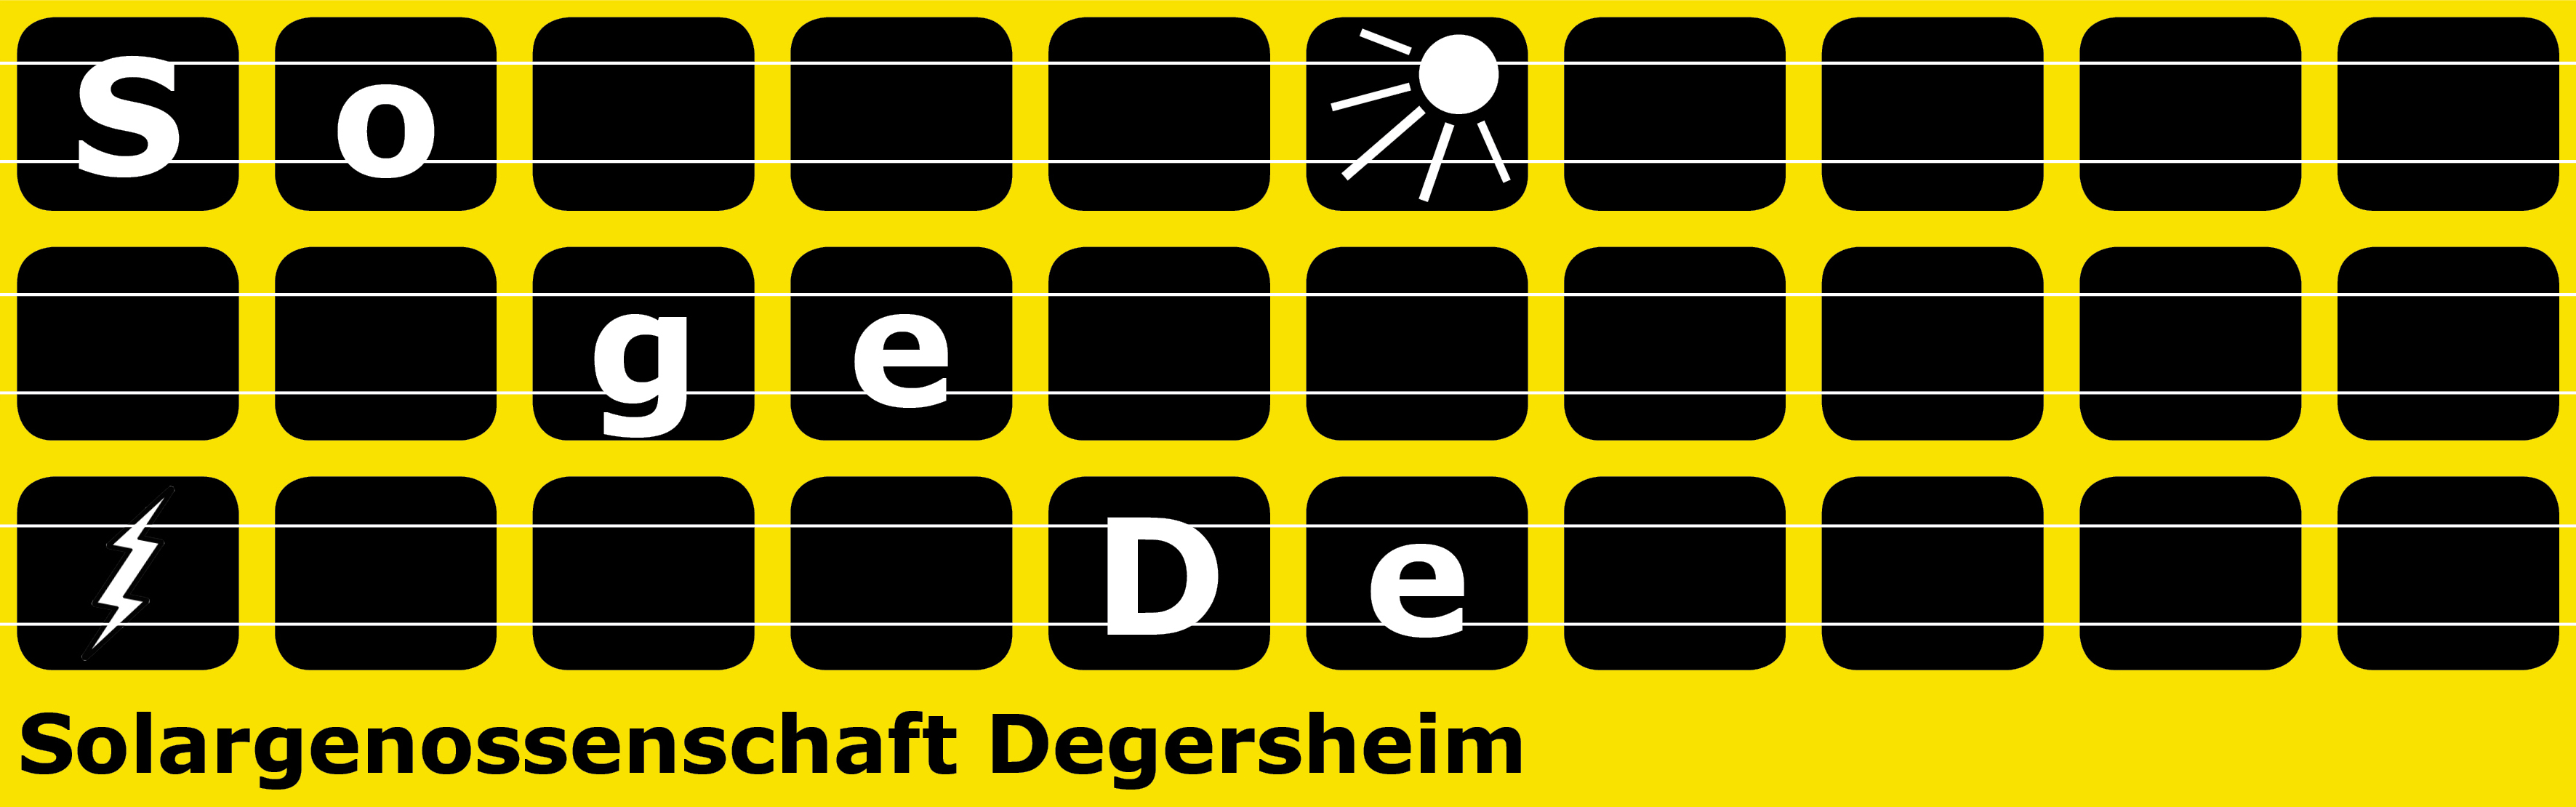 Solargenossenschaft Degersheim Logo